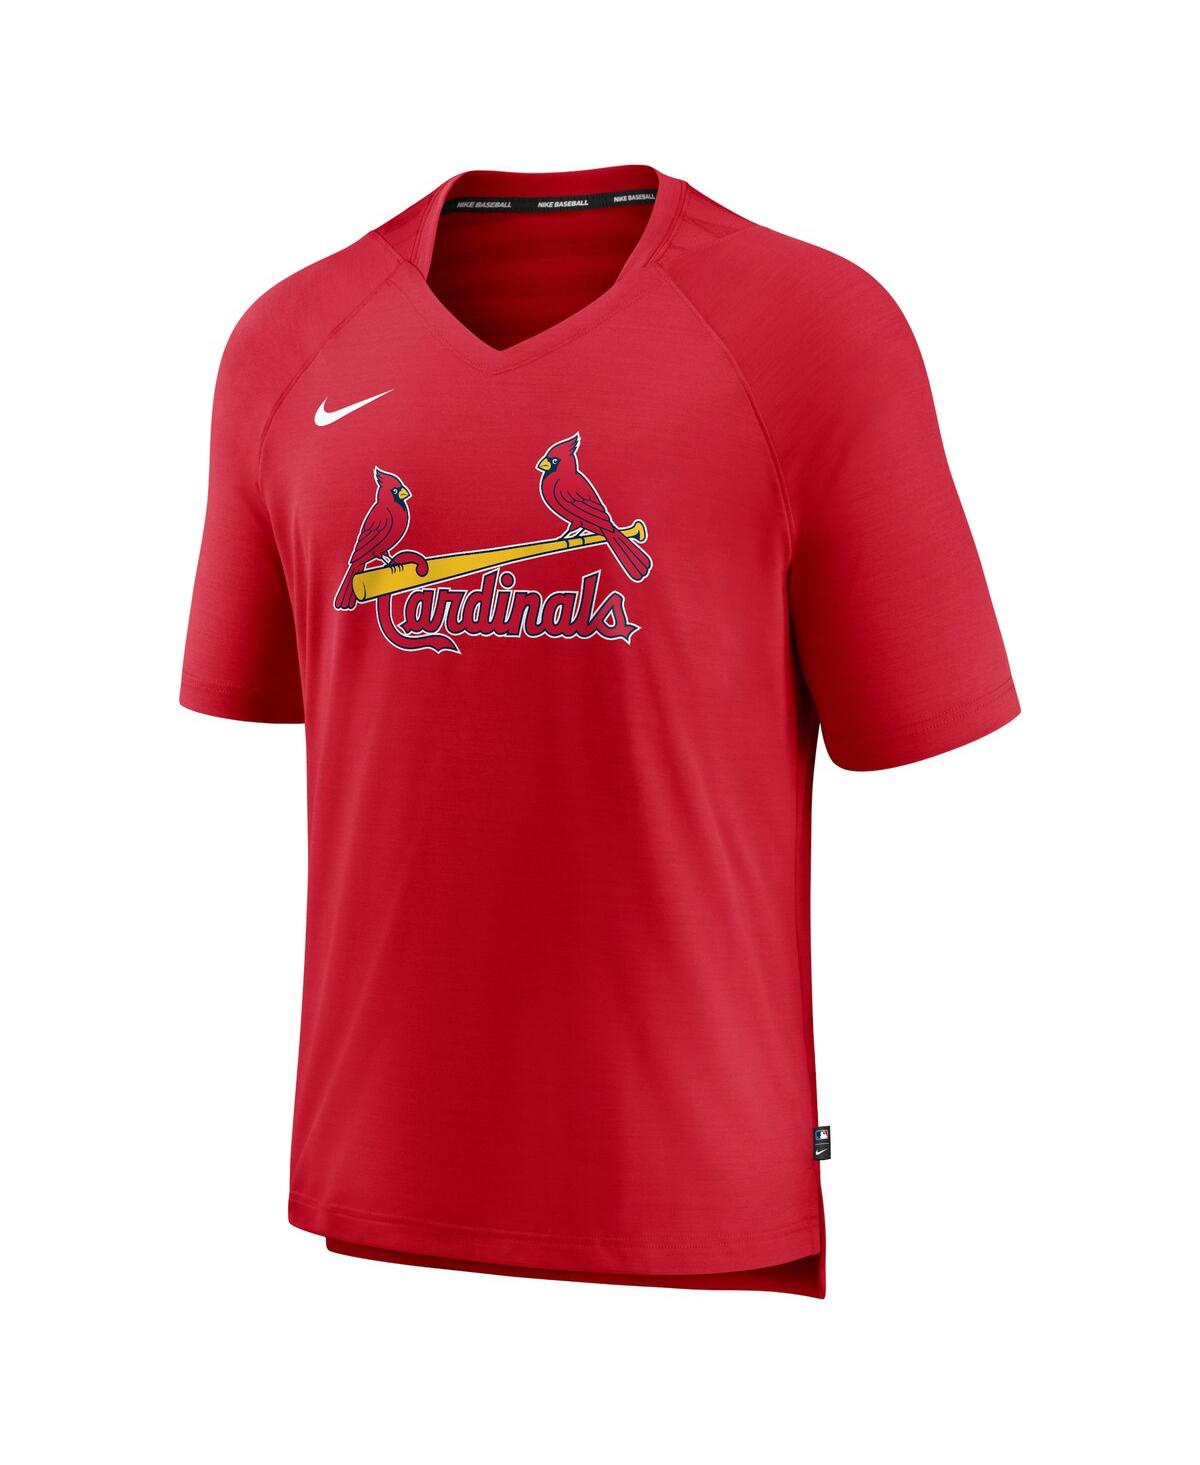 Shop Nike Men's  Red St. Louis Cardinals Authentic Collection Pregame Raglan Performance V-neck T-shirt